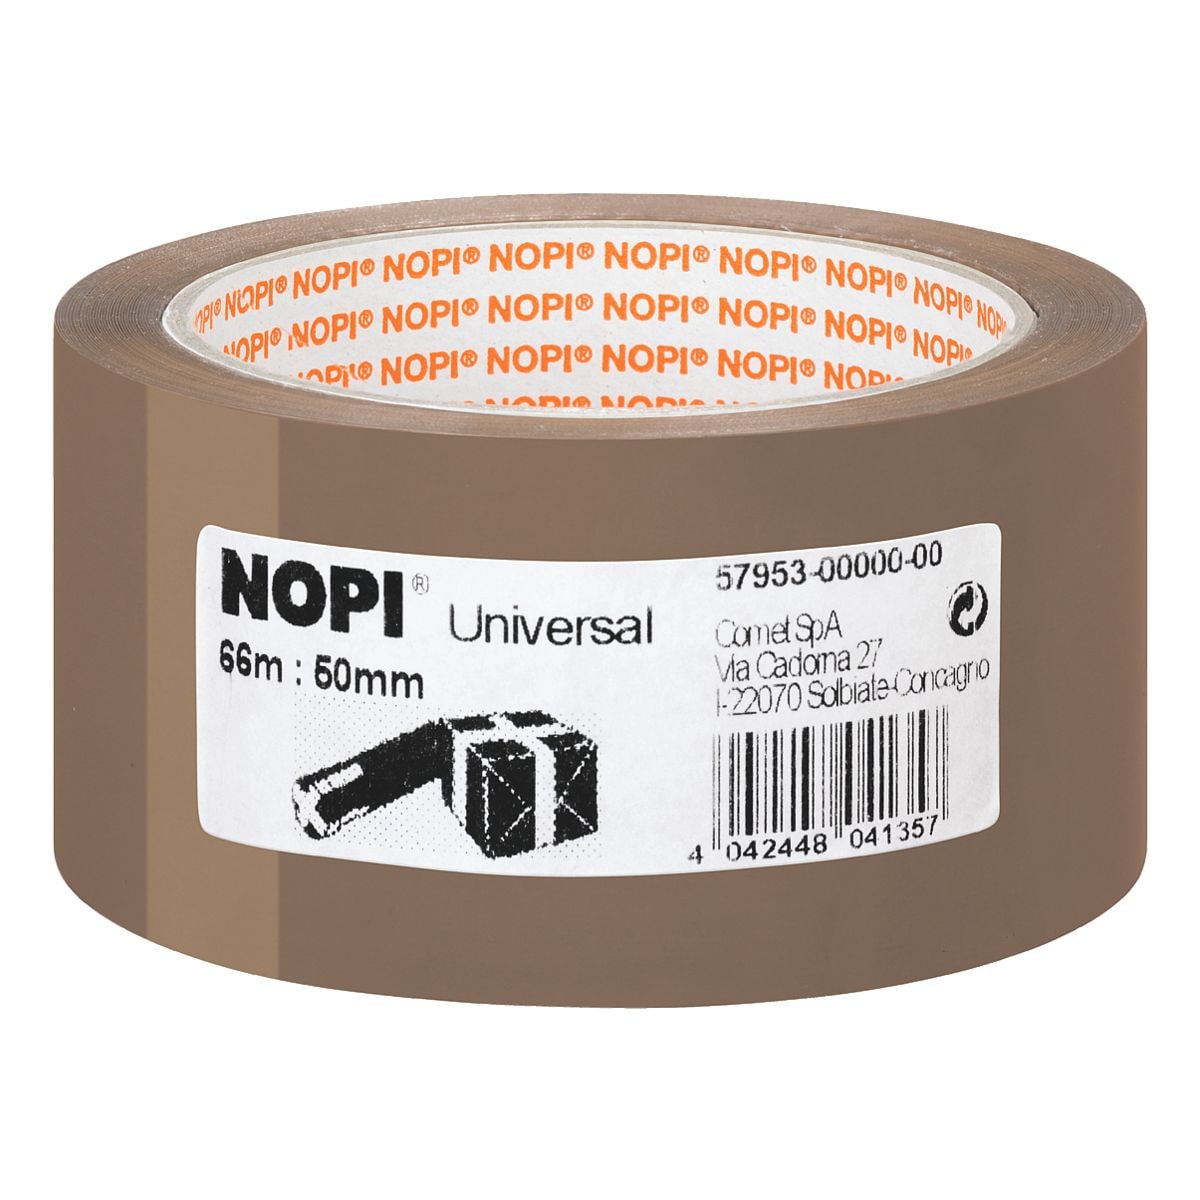 verpakkingstape Nopi Universal, 50 mm breed, 66 m lang